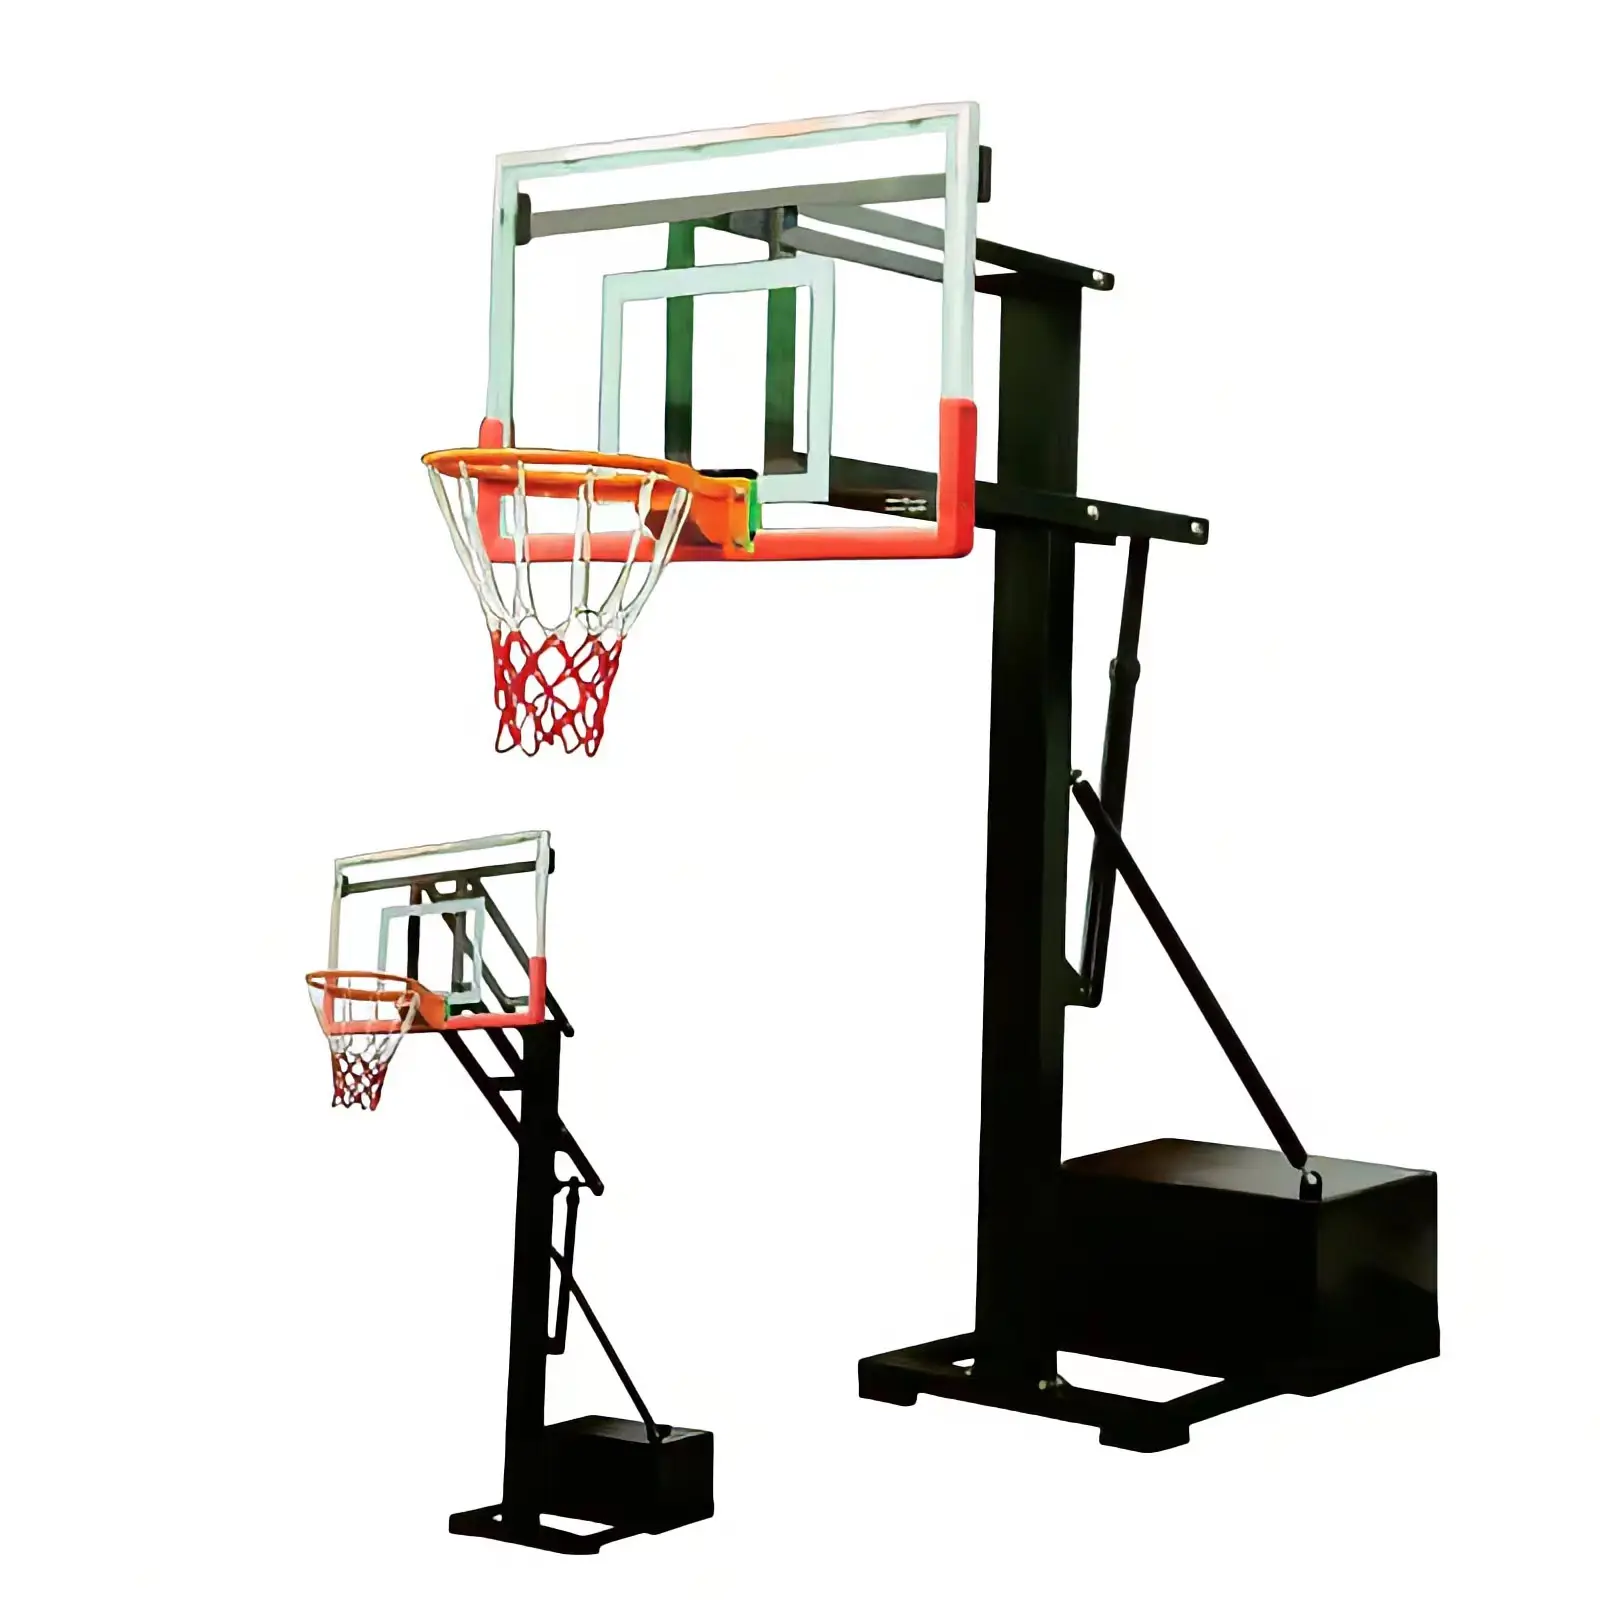 Support de basket-ball/support de panier de basket avec panneau arrière de basket-ball fixe